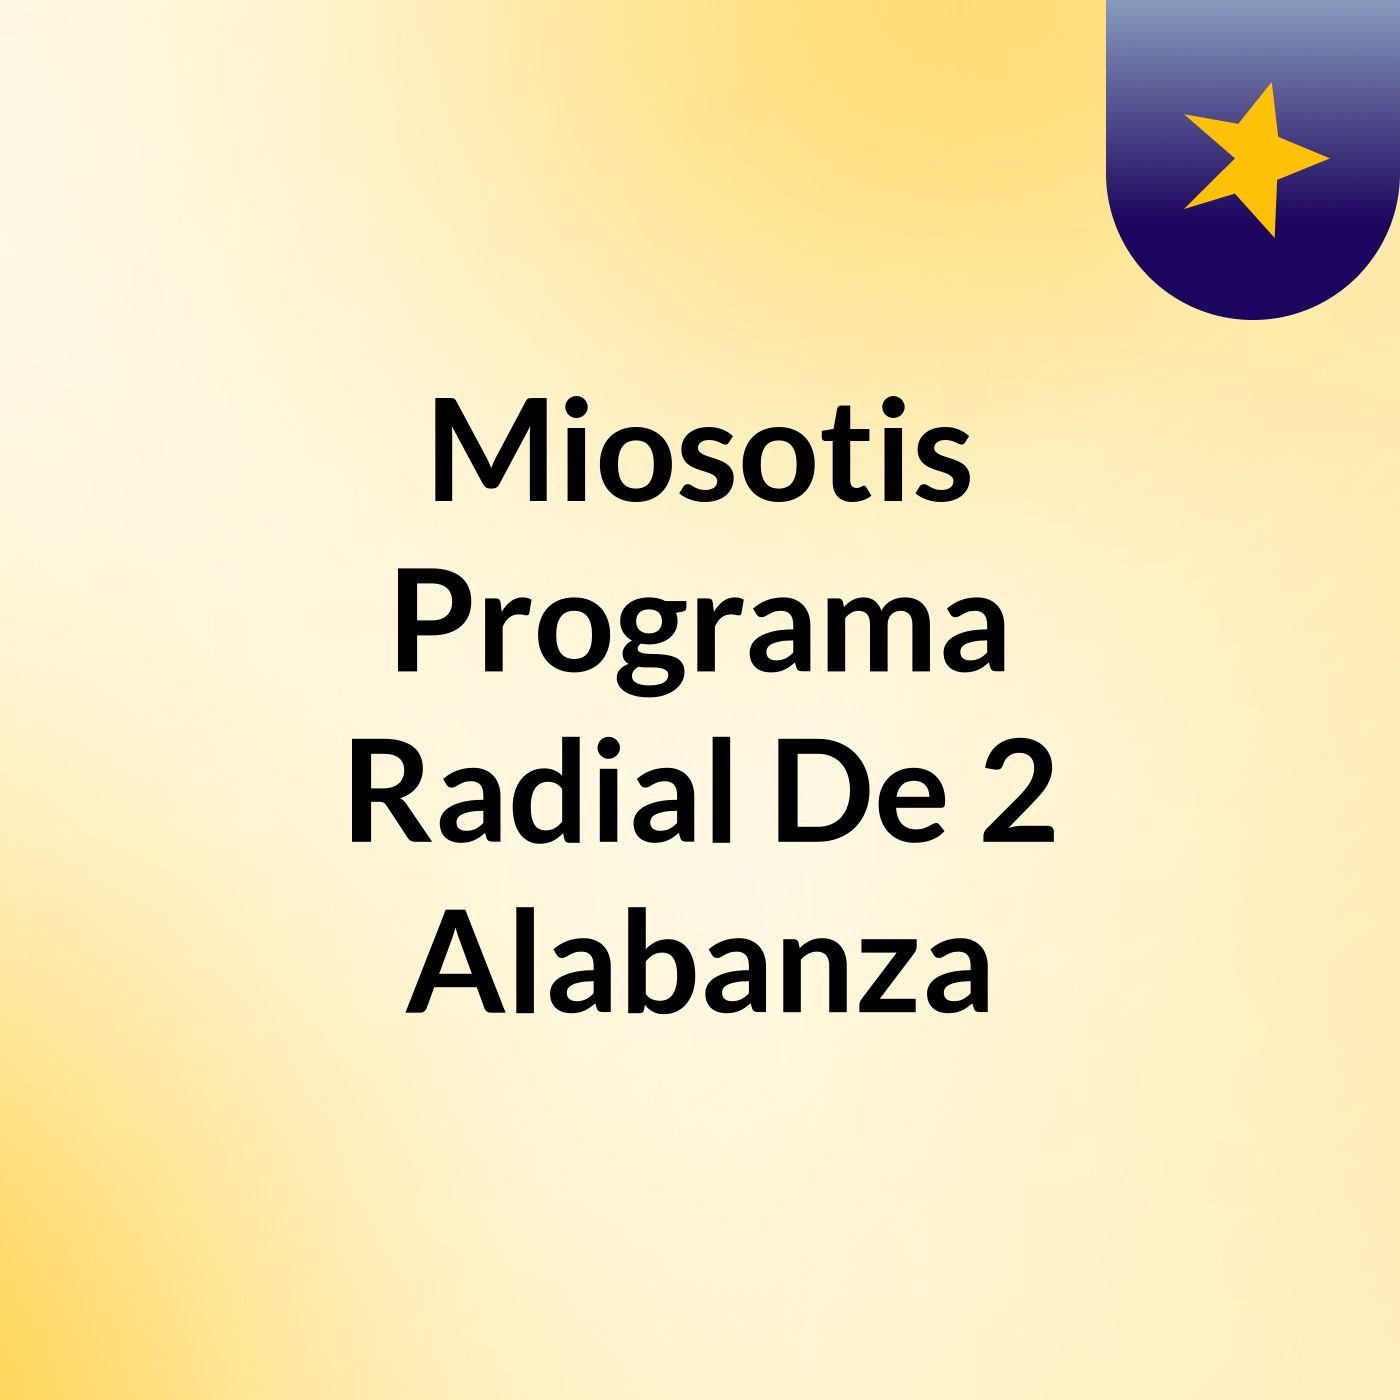 Miosotis Programa Radial De 2 Alabanza